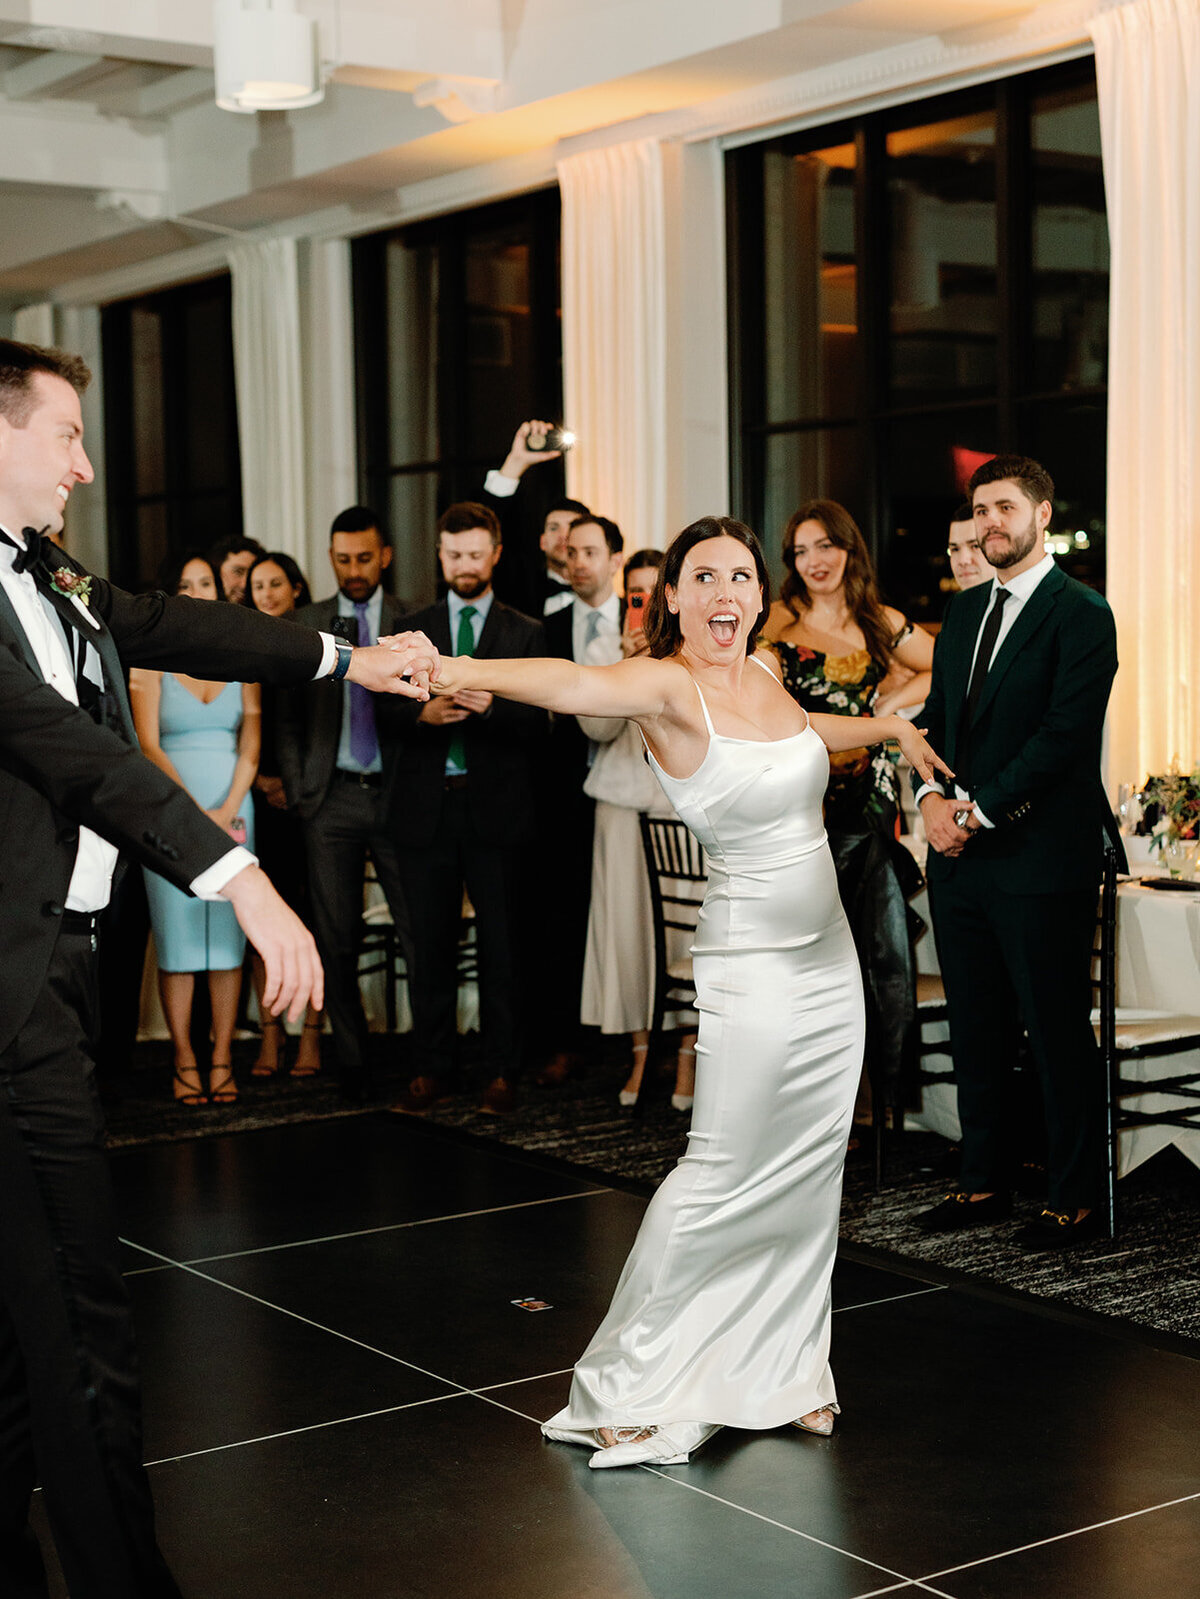 film image of bride and groom dancing